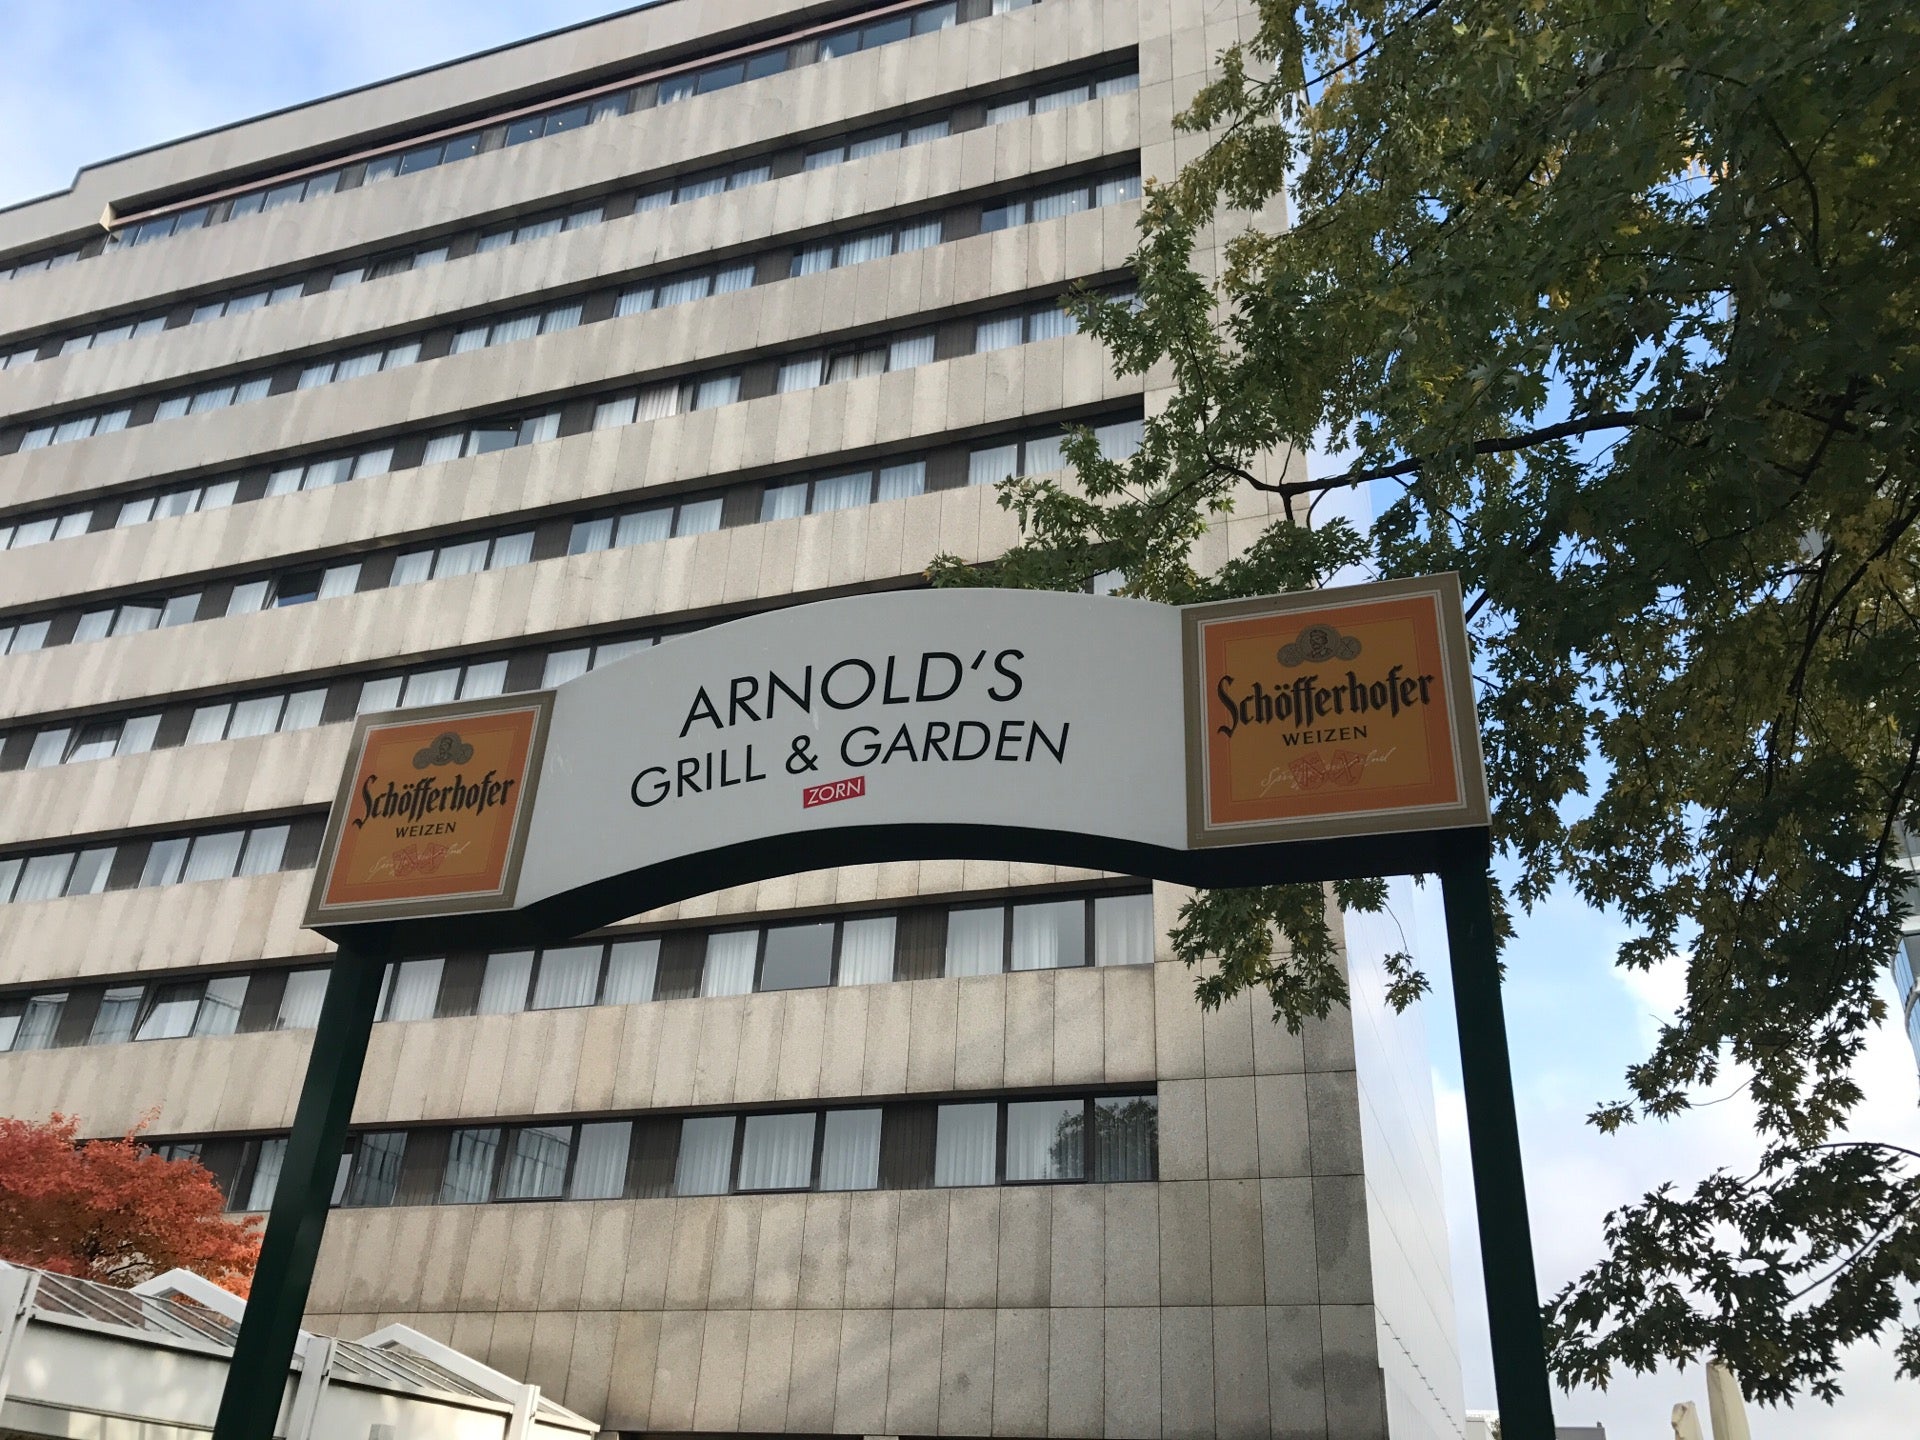 Arnold's Grill & Garden